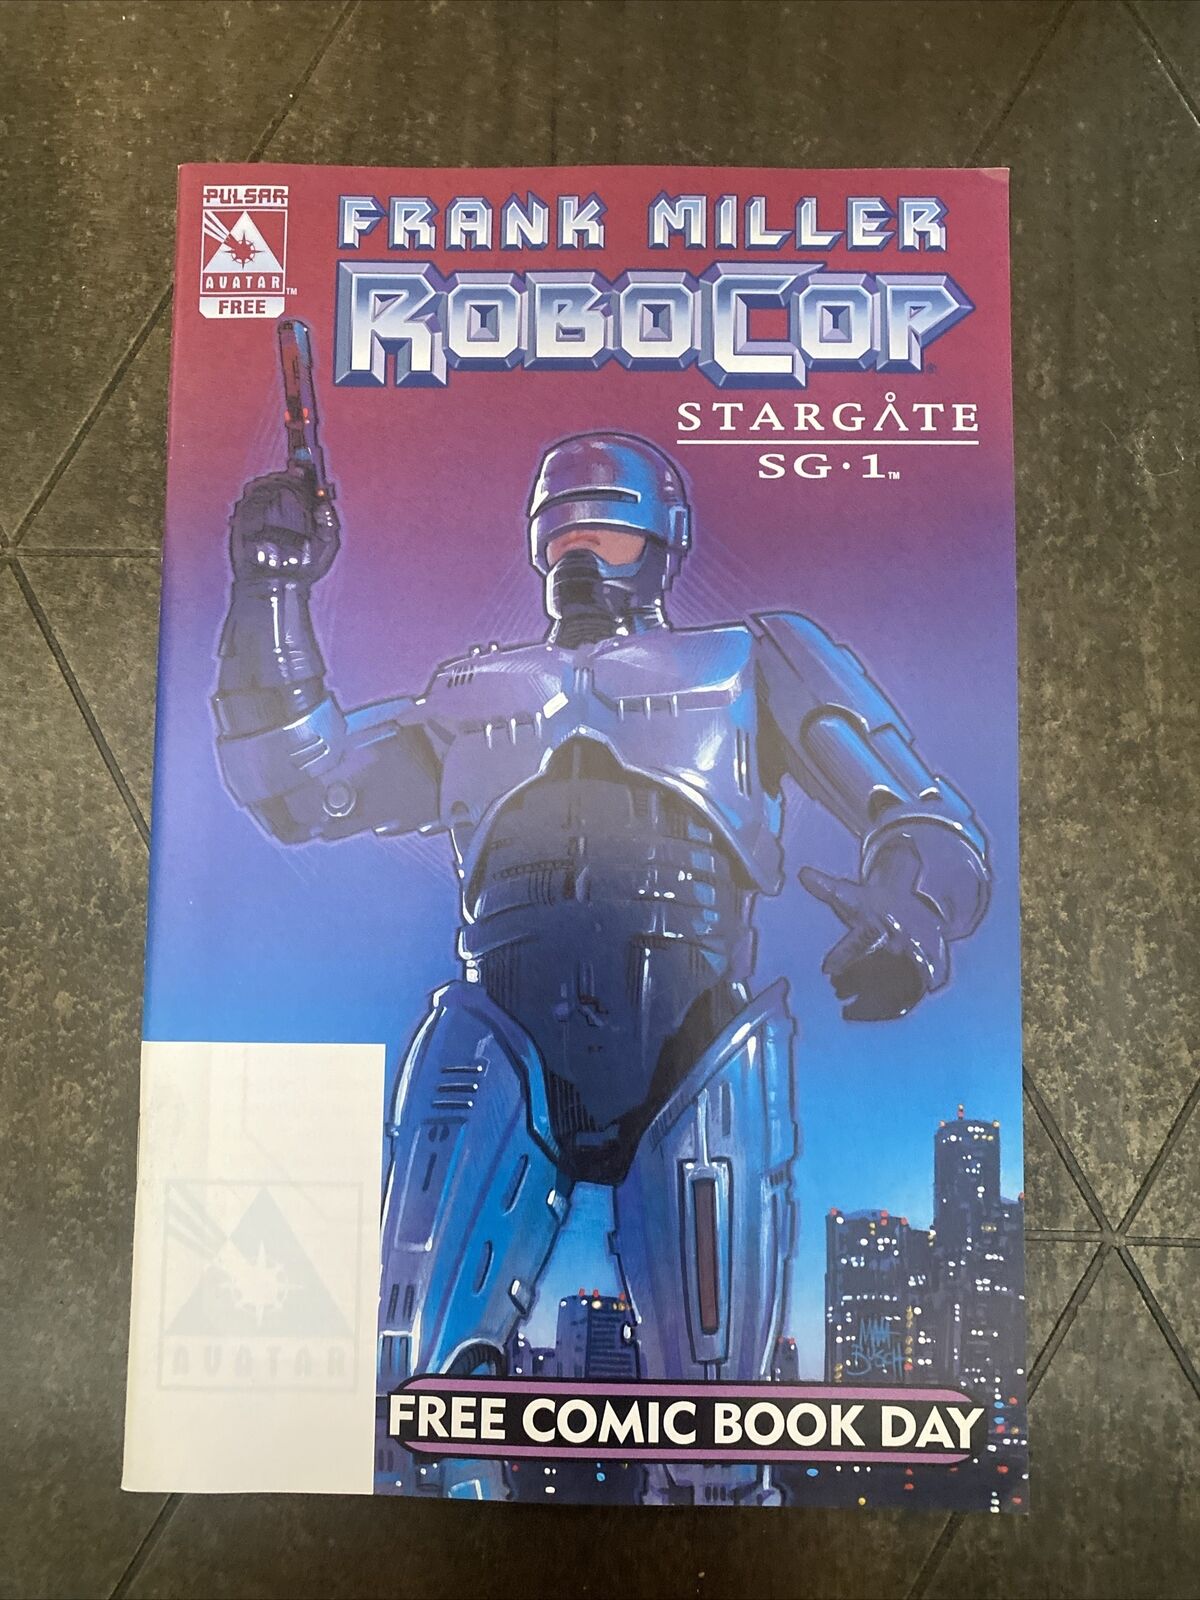 Robocop (Frank Miller’s…) #2003 Free Comic Book Day Avatar 